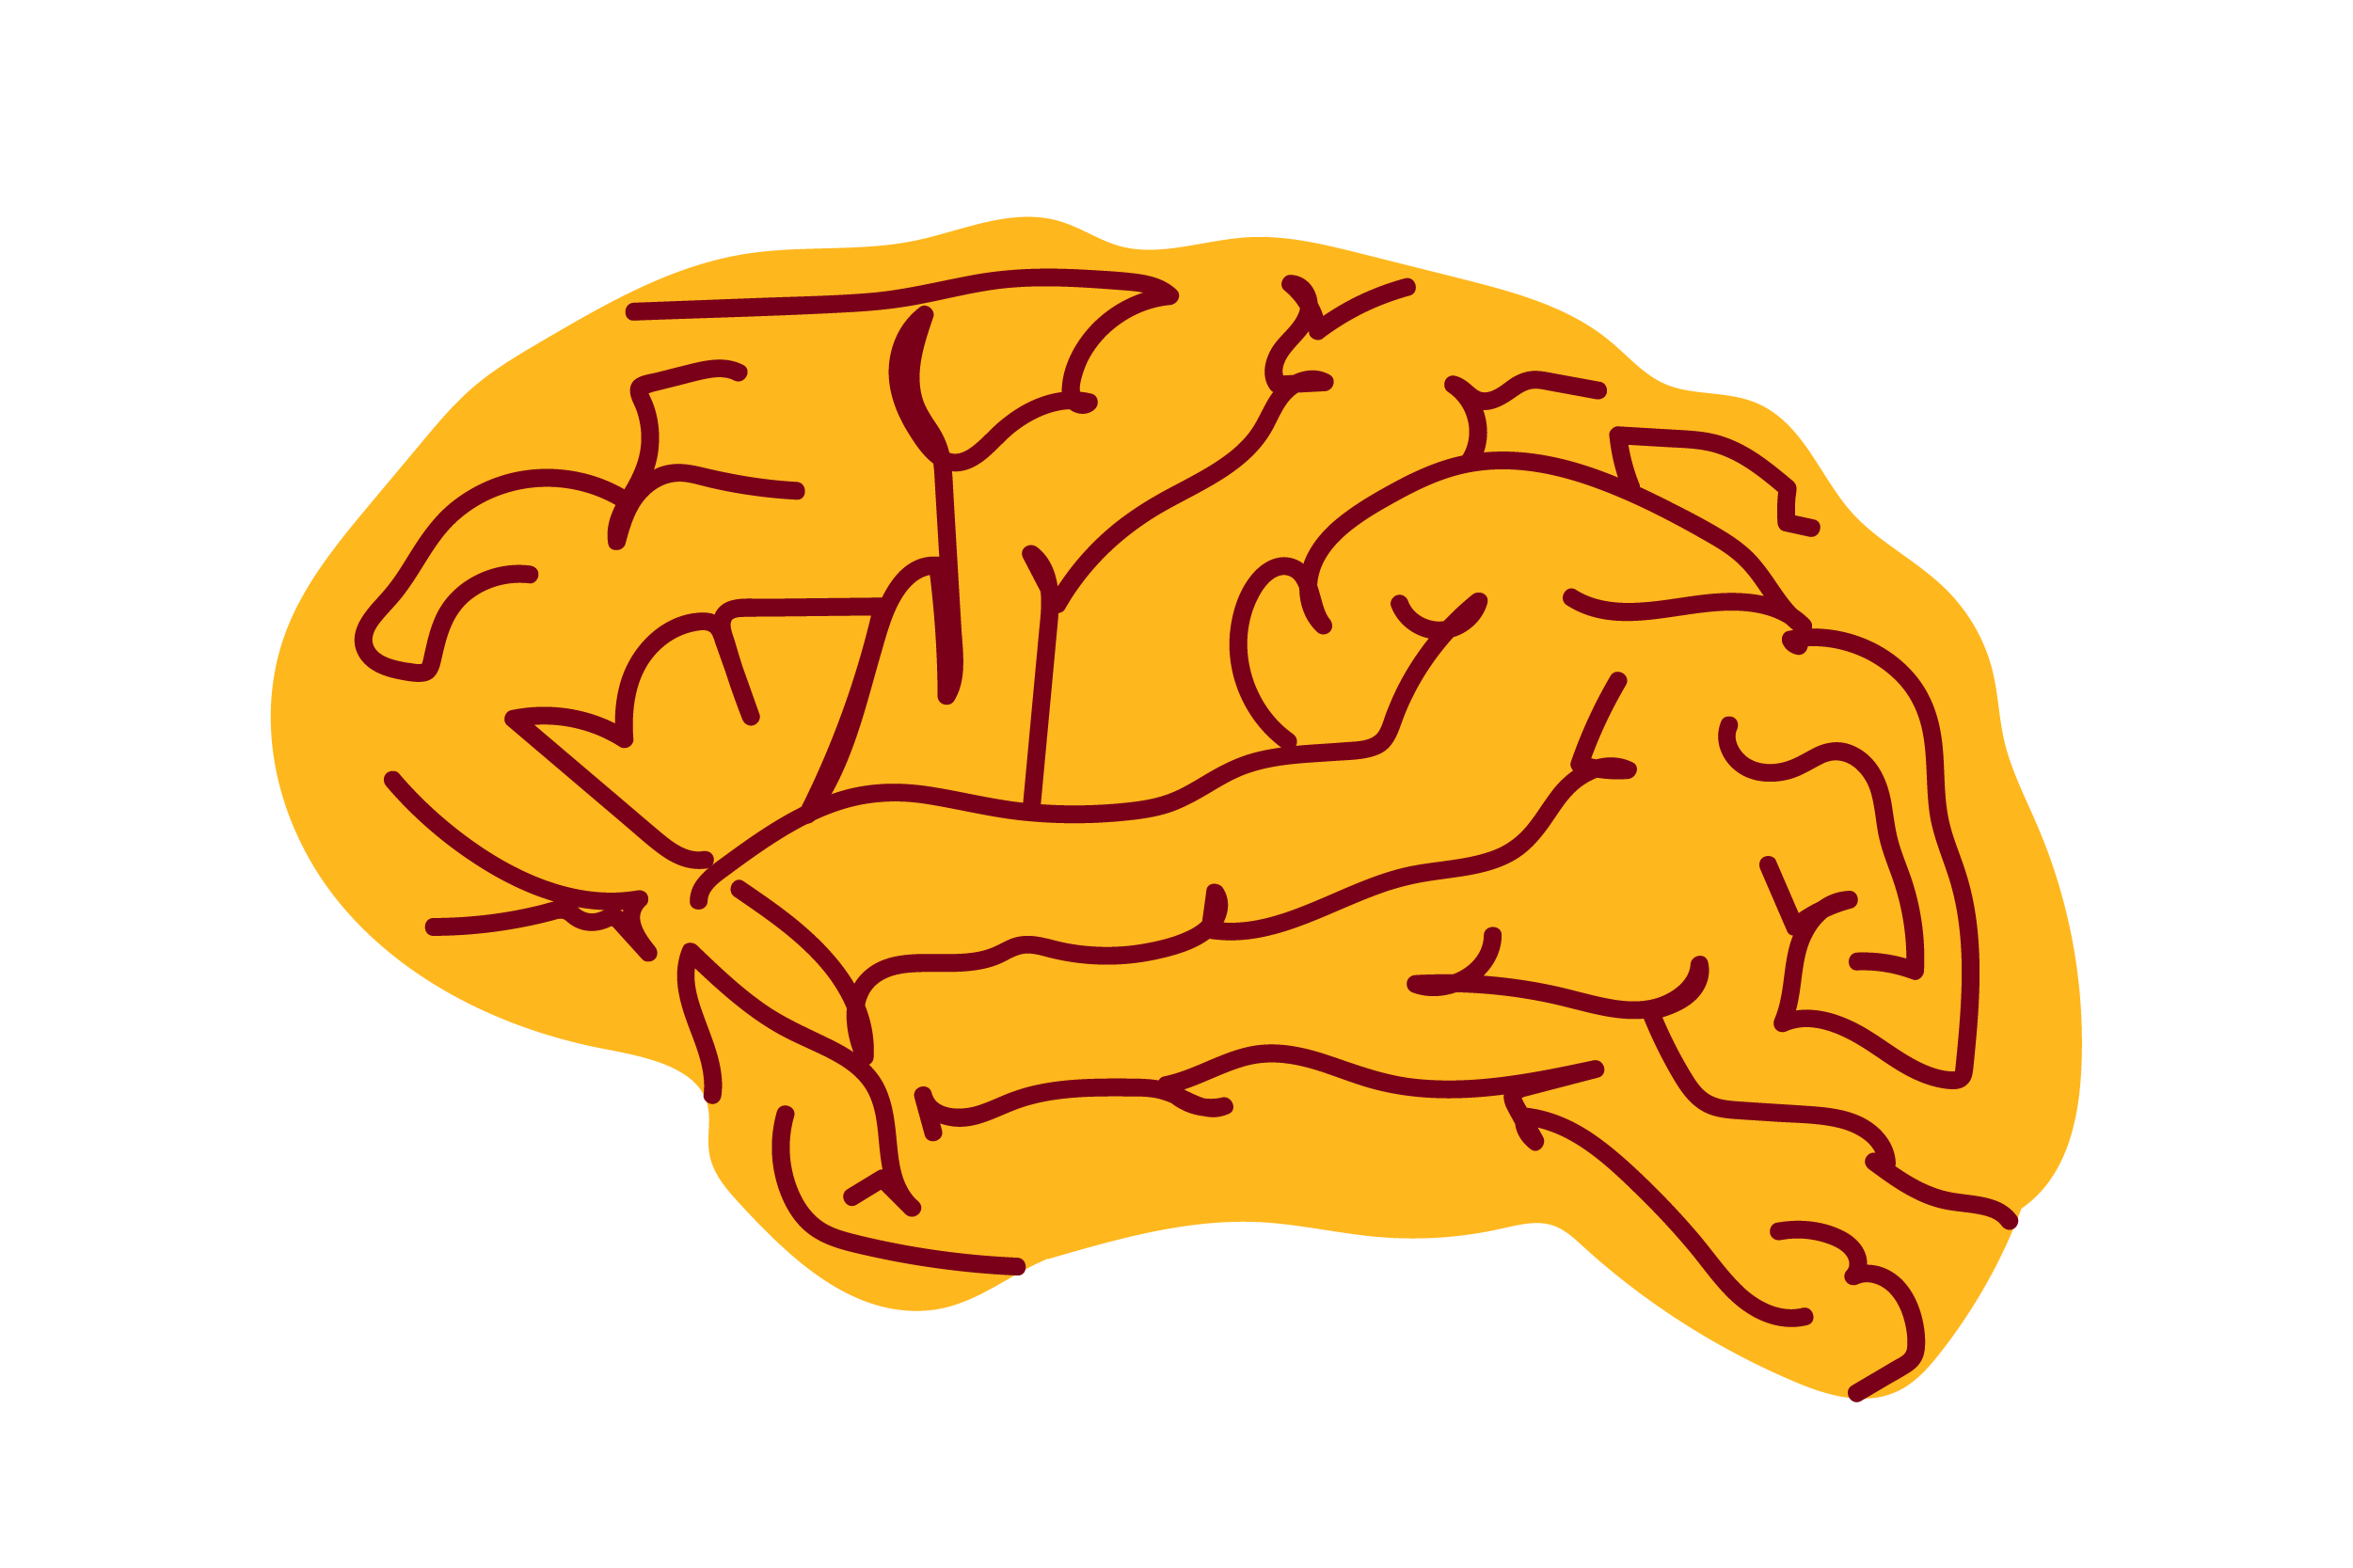 Gold brain illustration